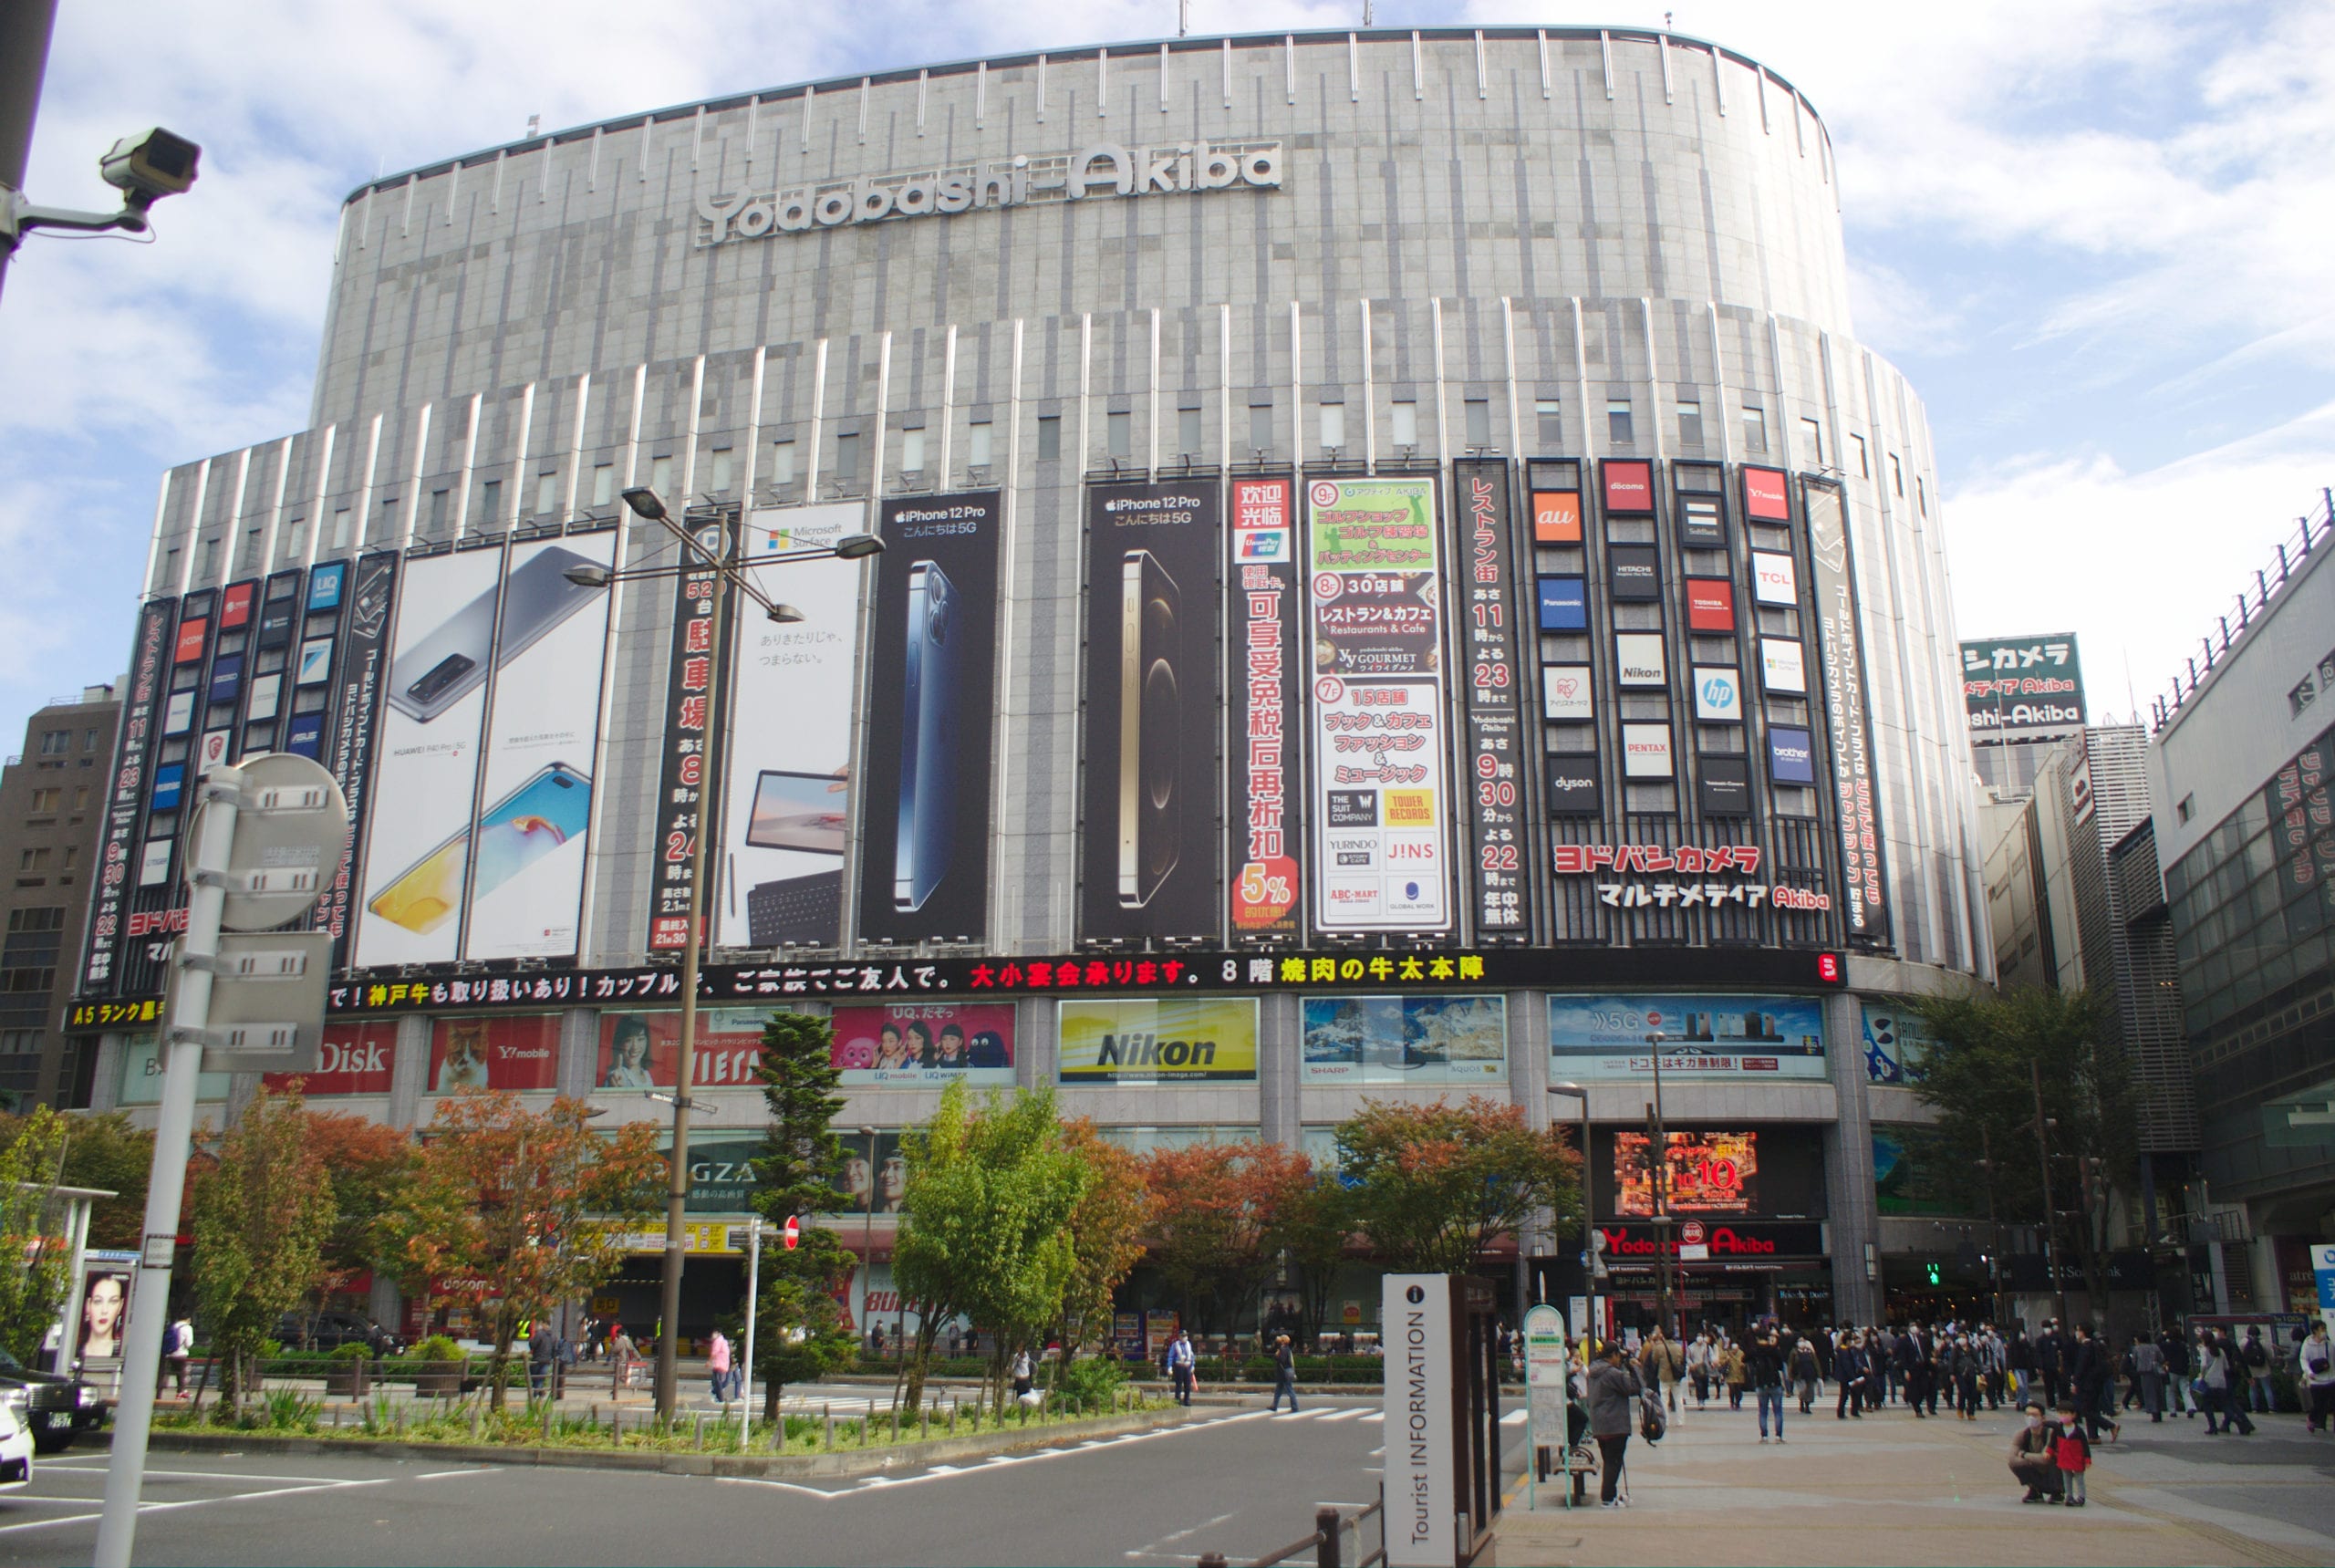 Yodobashi Camera by day, the biggest landmark in all of Akihabara